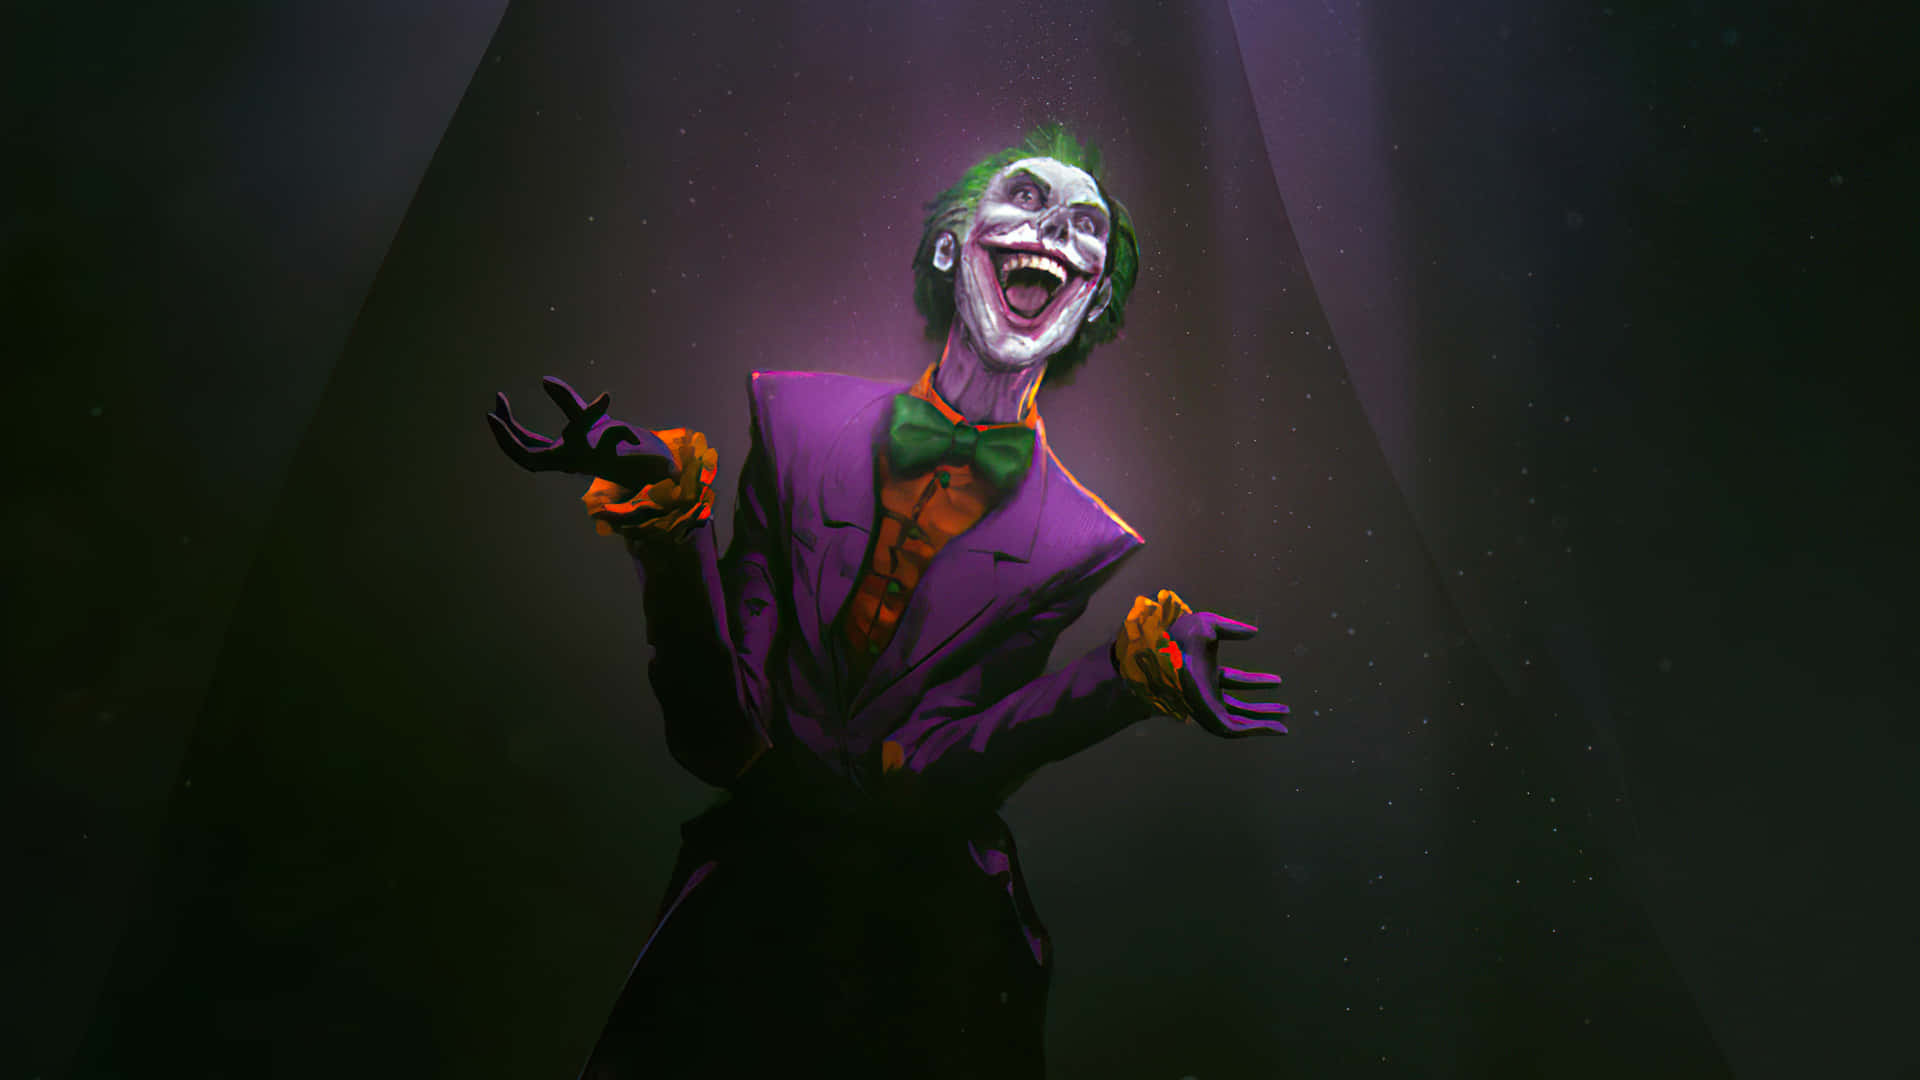 Maniacal Laugh Of The Joker